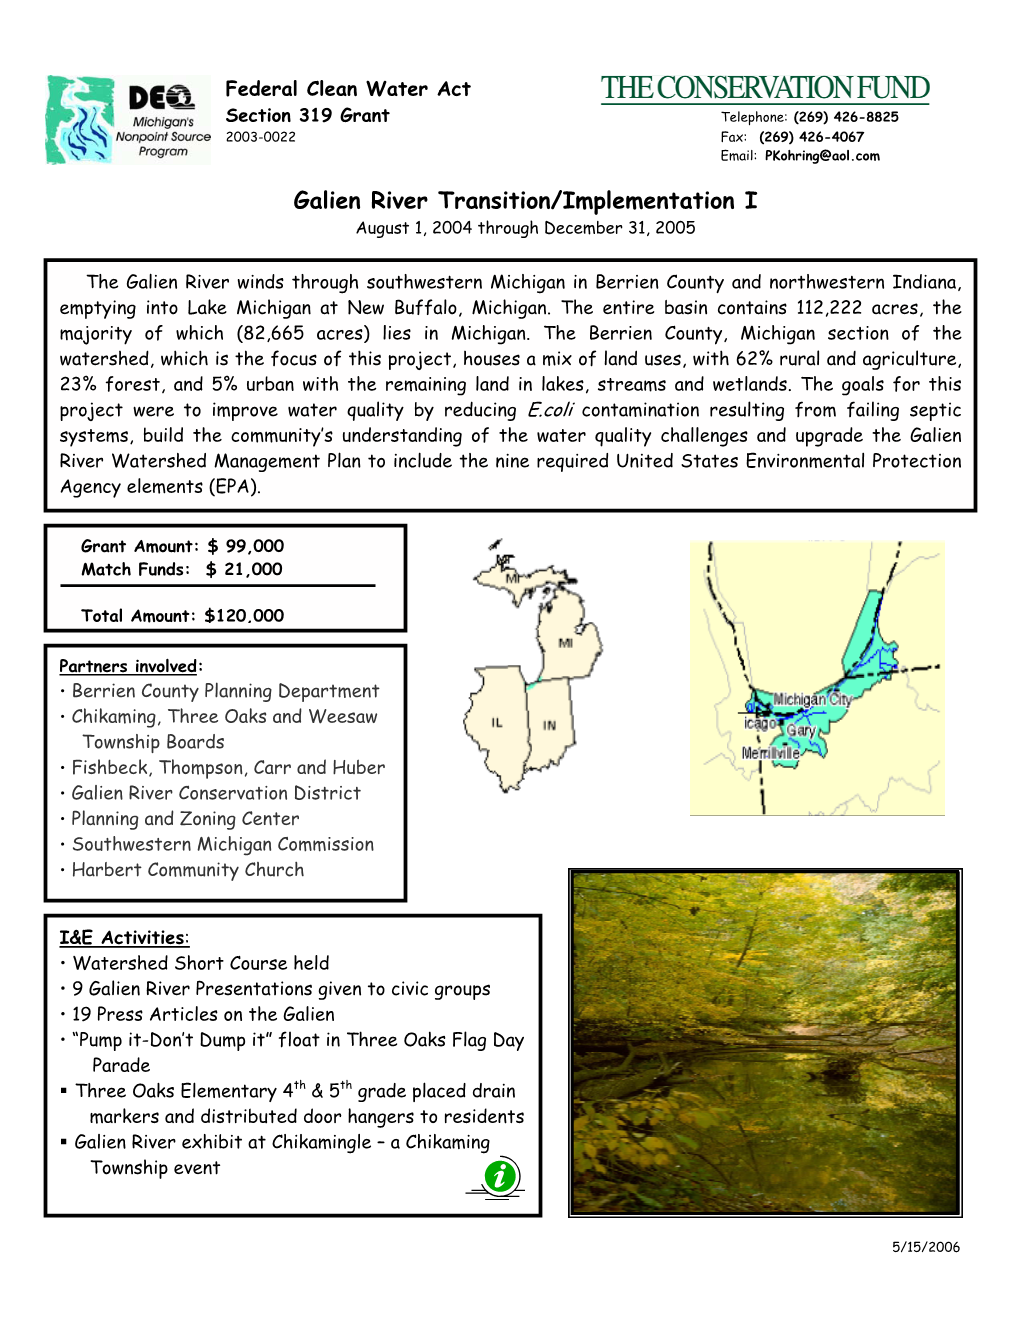 Galien River Transition/Implementation I August 1, 2004 Through December 31, 2005